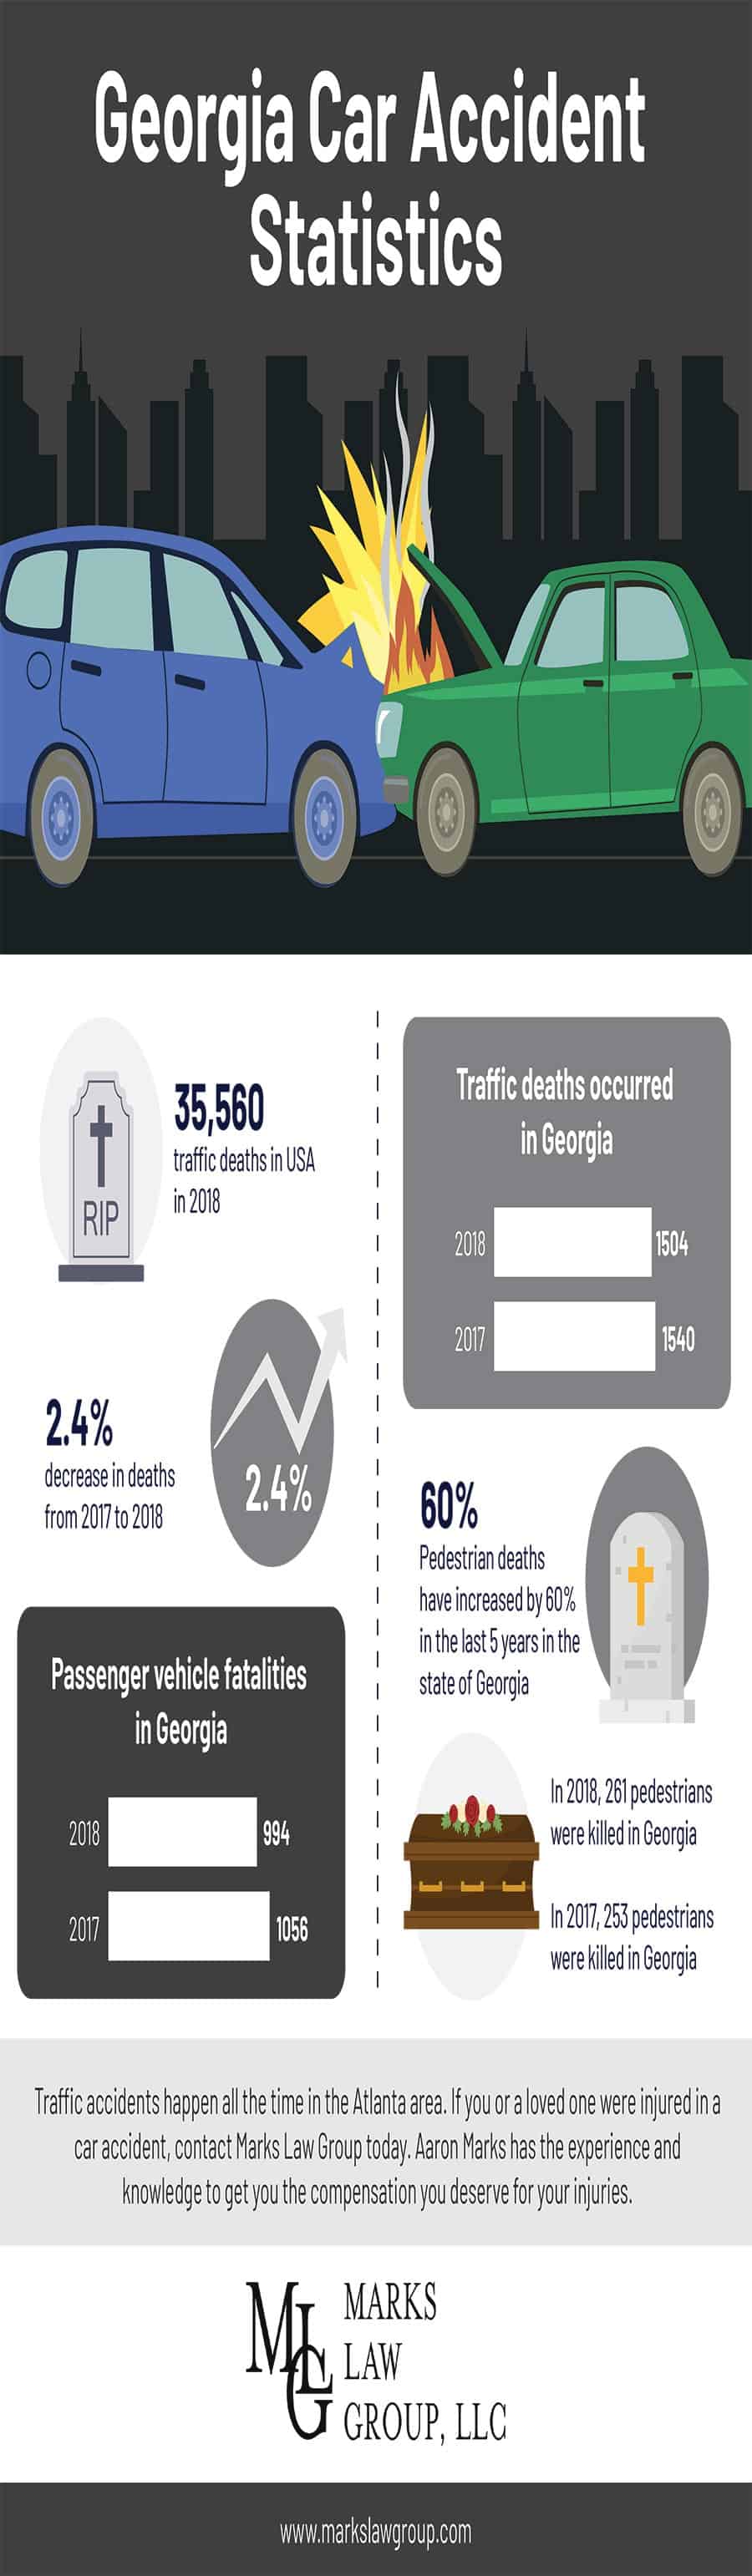 Marks-Georgia-car-accident-statistics-infographic_zaicl9.jpg